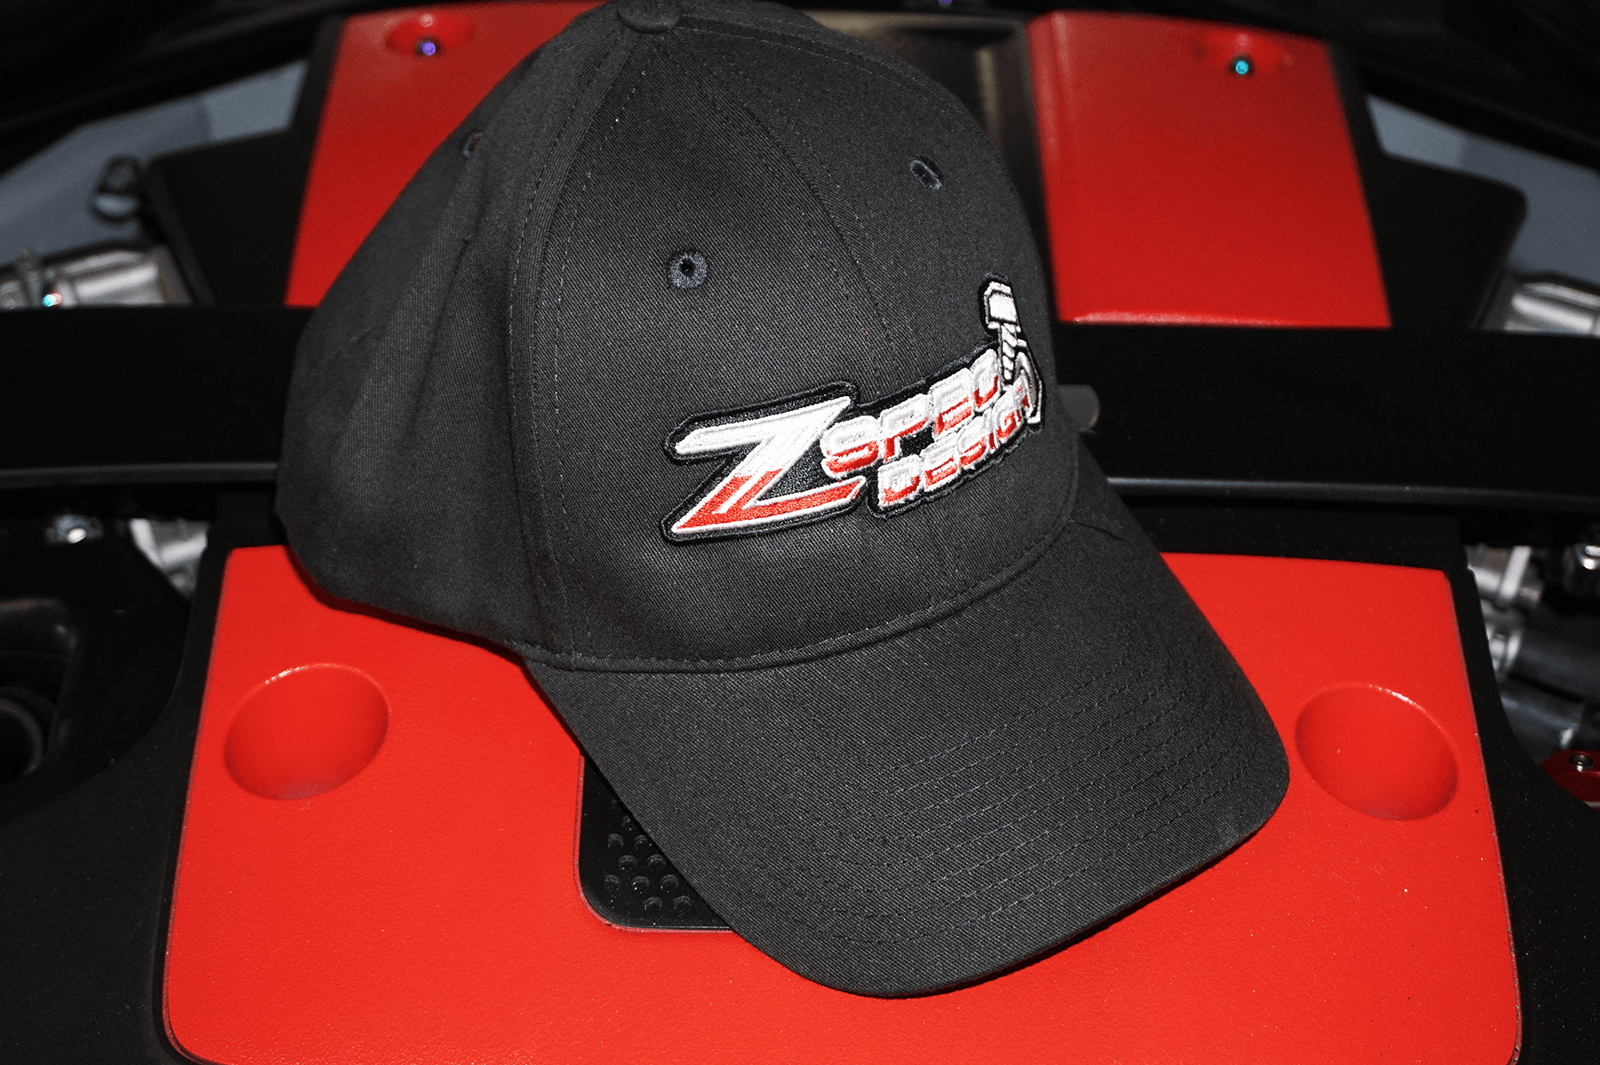 ZSPEC Design Lightweight Cotton Baseball-Style Hats, Red or Black, Adjustable - ZSPEC Design LLC - Shirts & Tops - apparel, clothing, hat, t-shirt, ZSPEC - zspecdesign.com